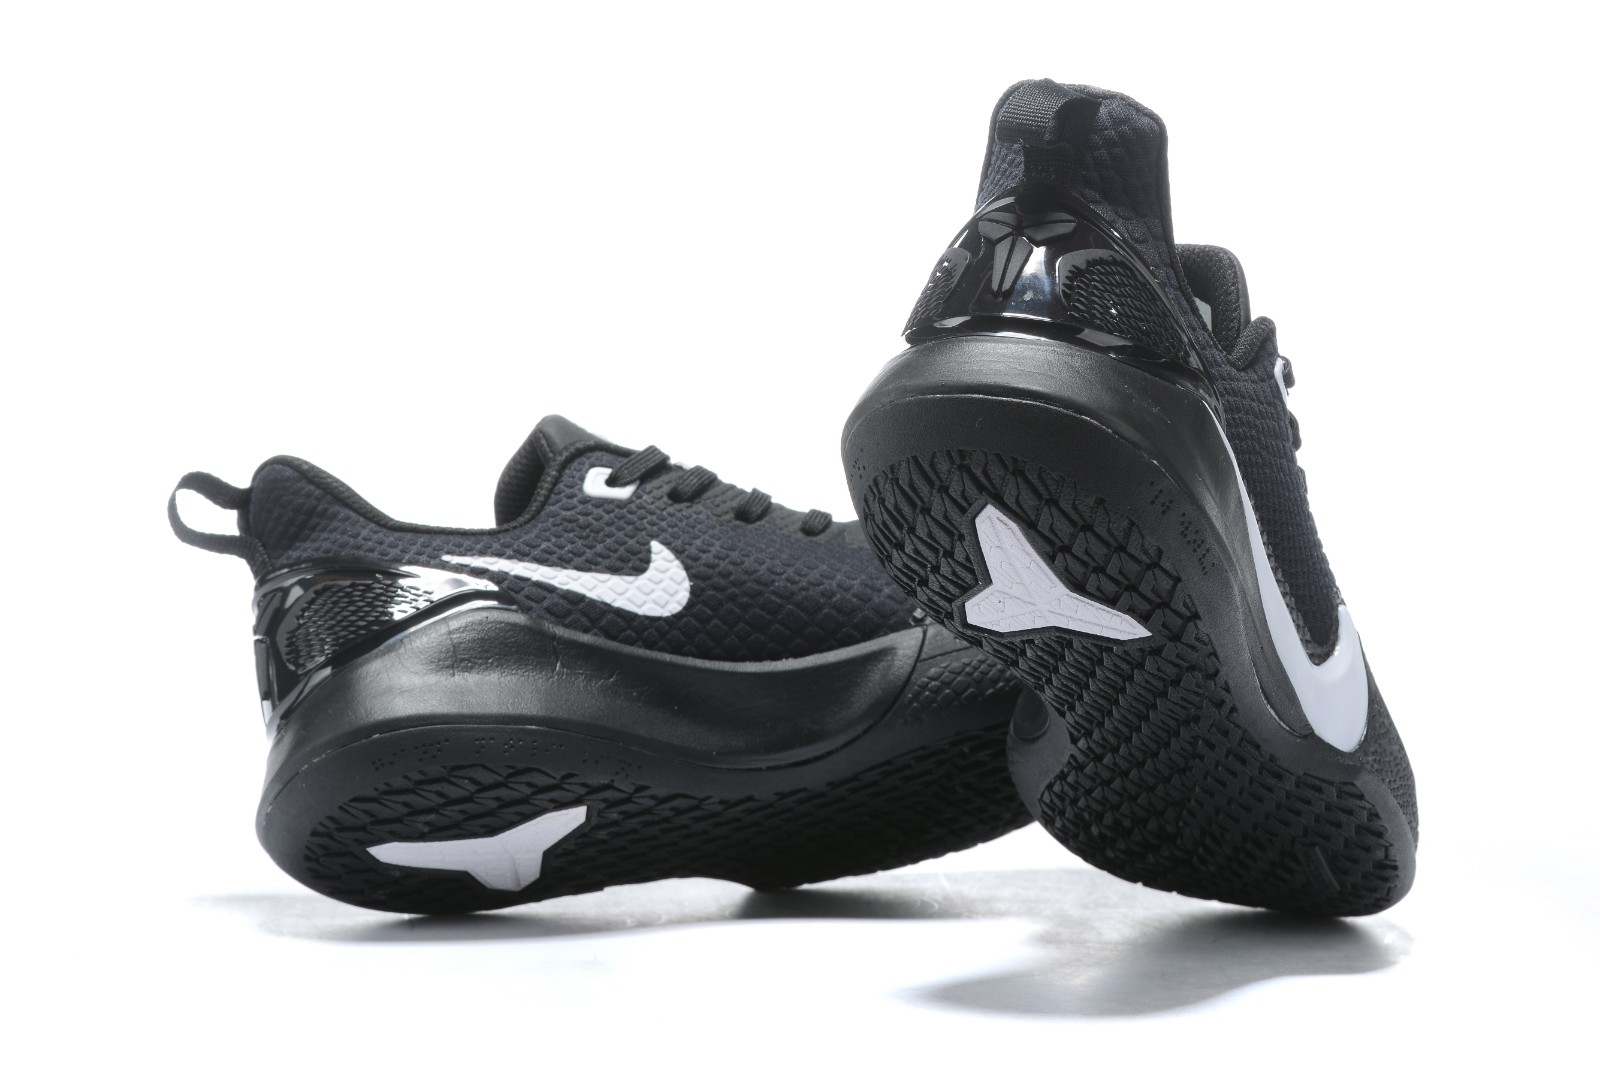 101 - New Release Nike Kobe Mamba Focus EP Black Samurai Kobe Basketball Shoes AO4434 - superman nike shoes 13 boots - GmarShops